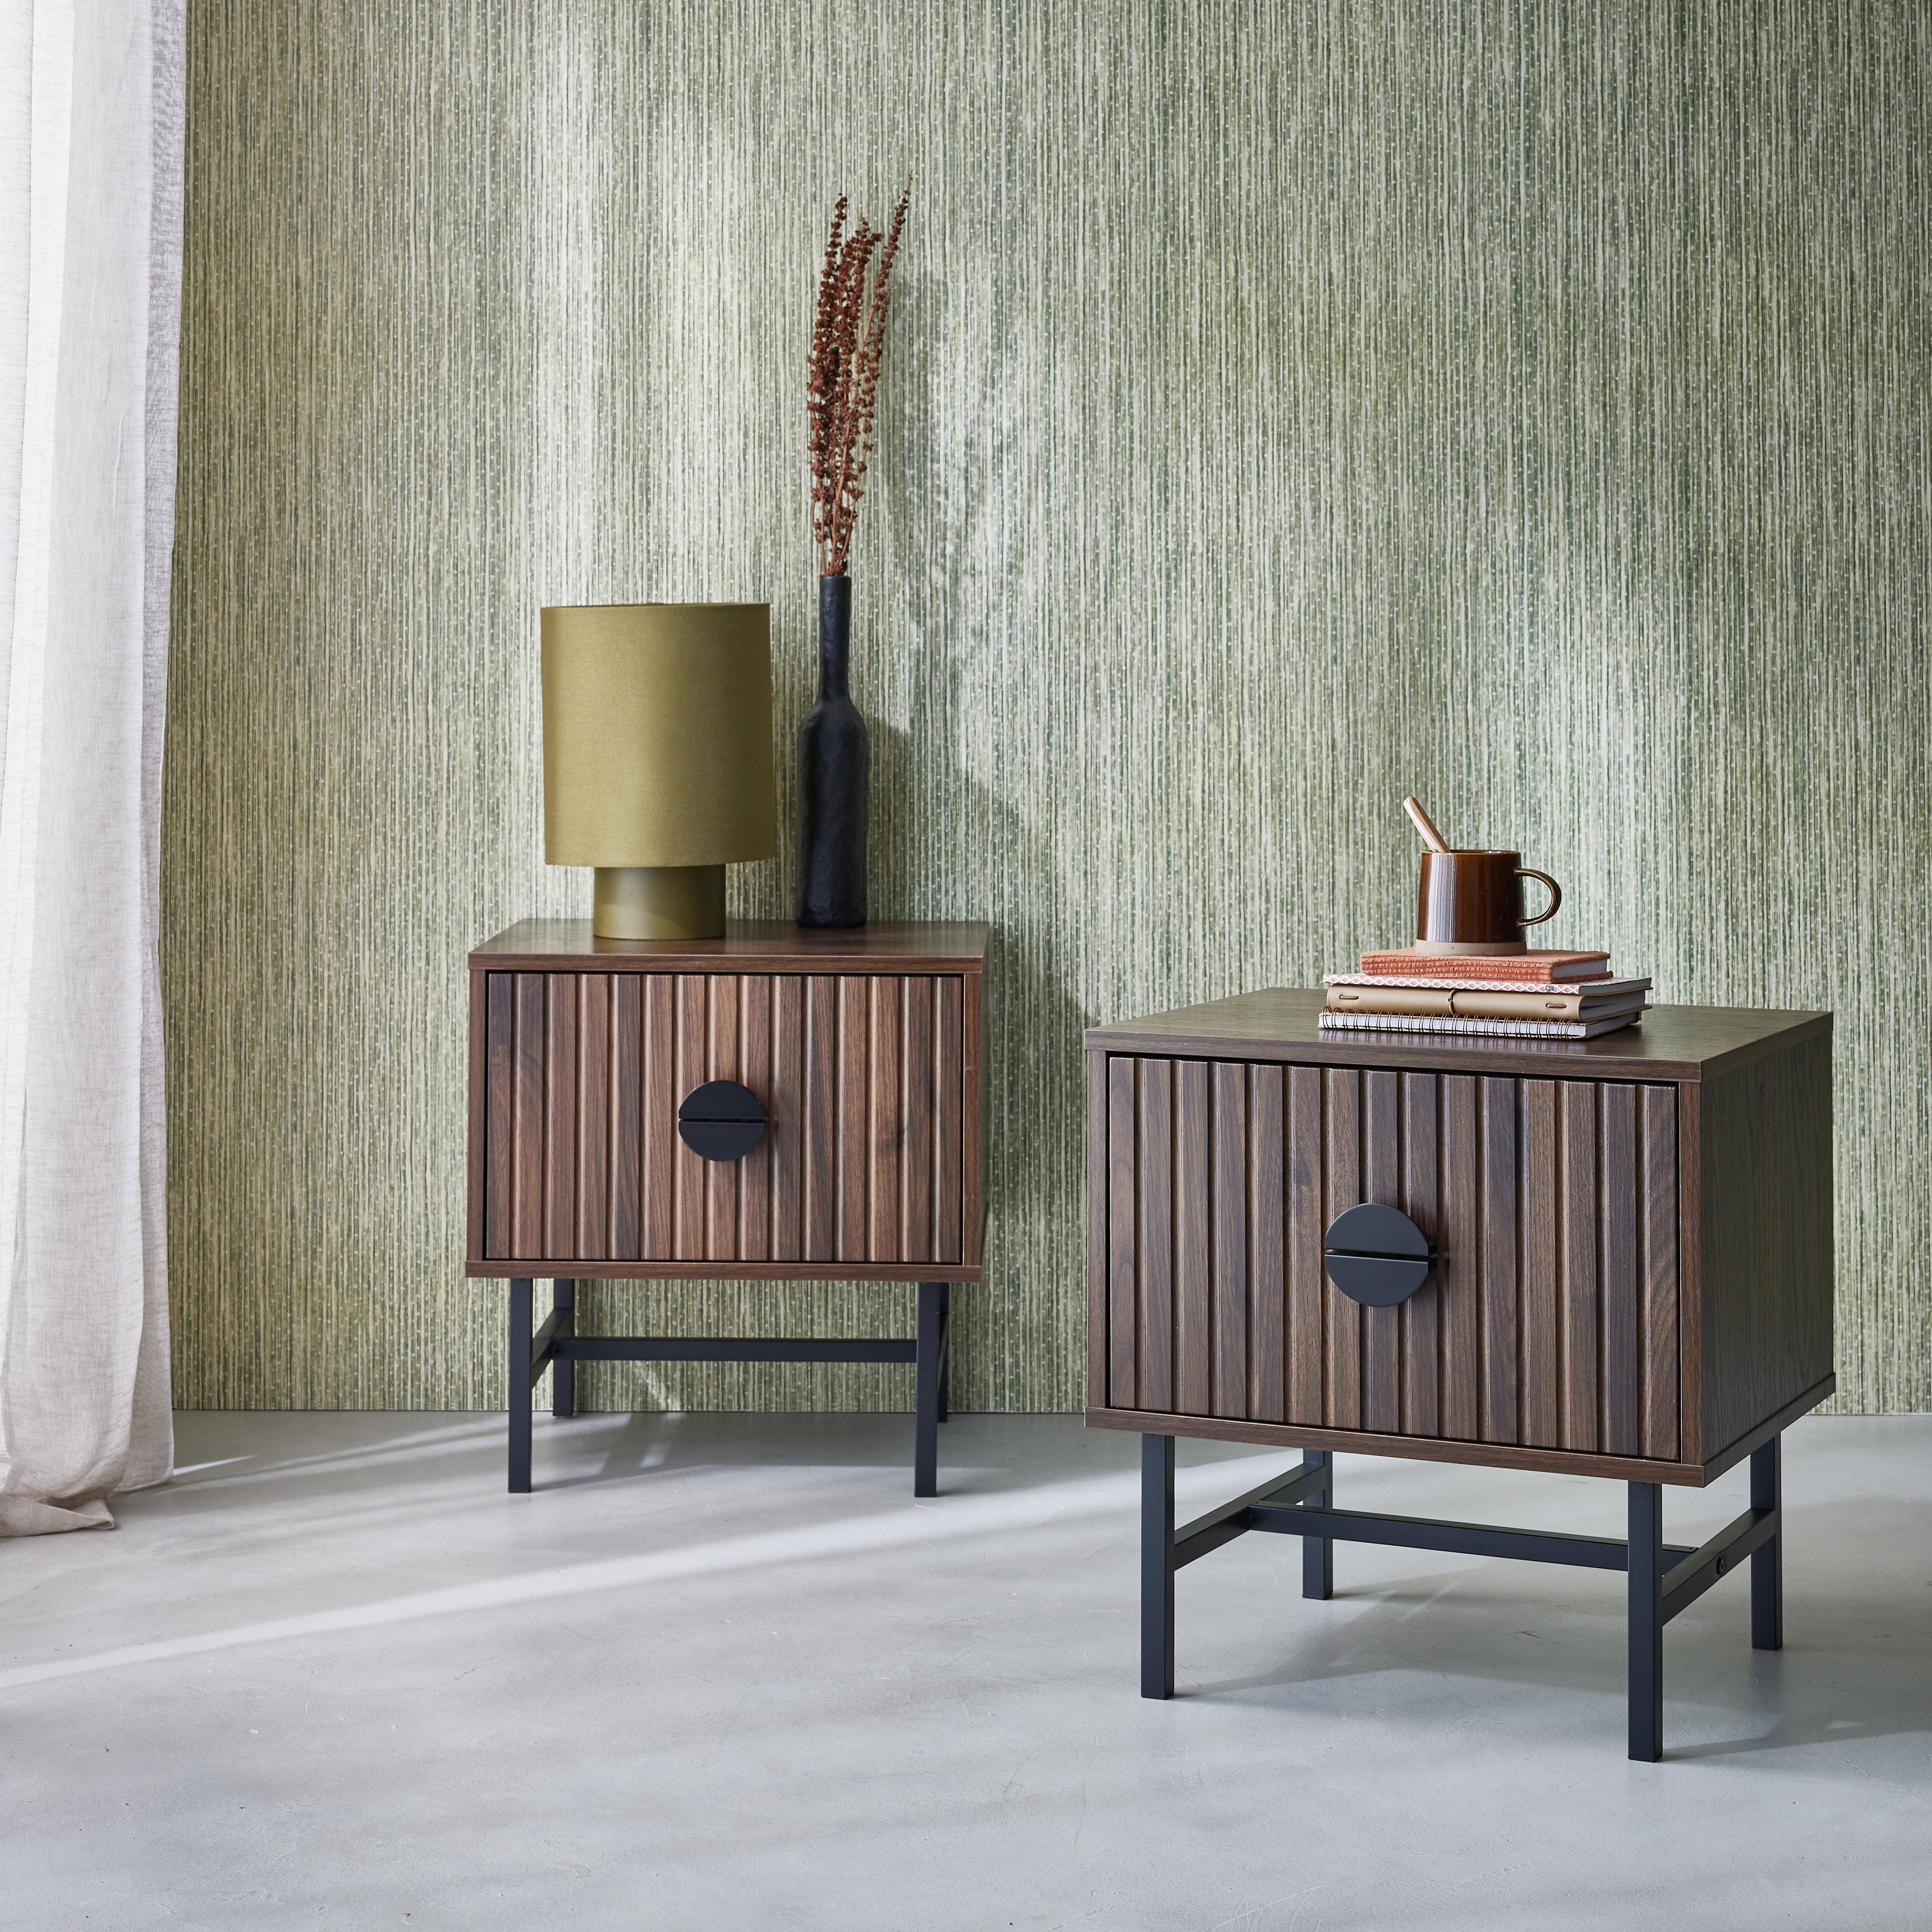 Set of 2 dark wood effect bedside tables, one drawer, L 48 x W 39 x H 50cm Photo2